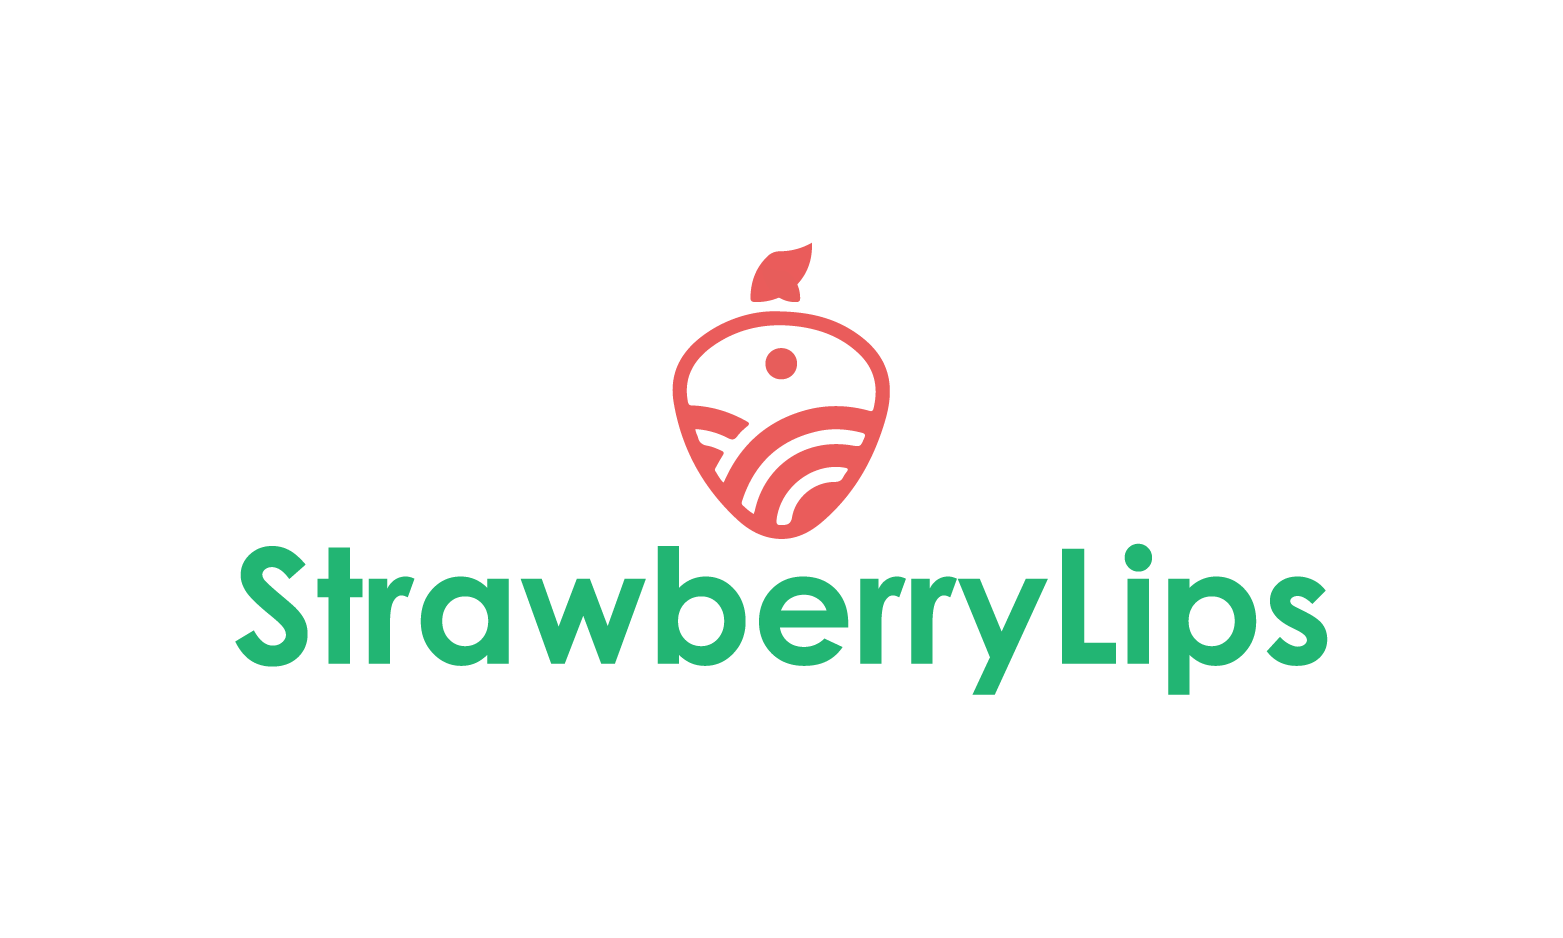 StrawberryLips.com - Creative brandable domain for sale